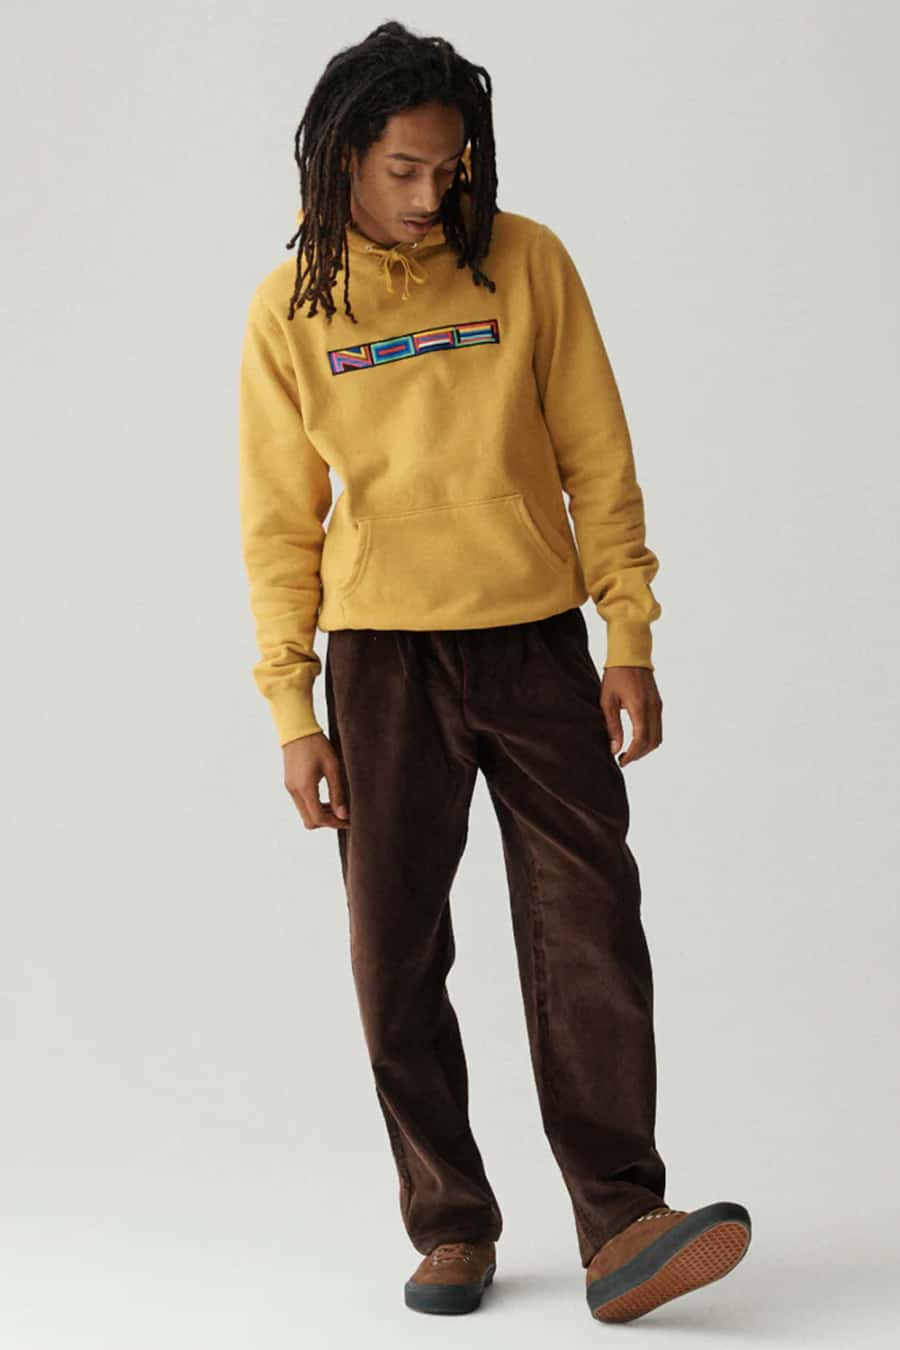 Men's brown corduroy trousers, yellow streetwear hoodie and brown sneakers outfit